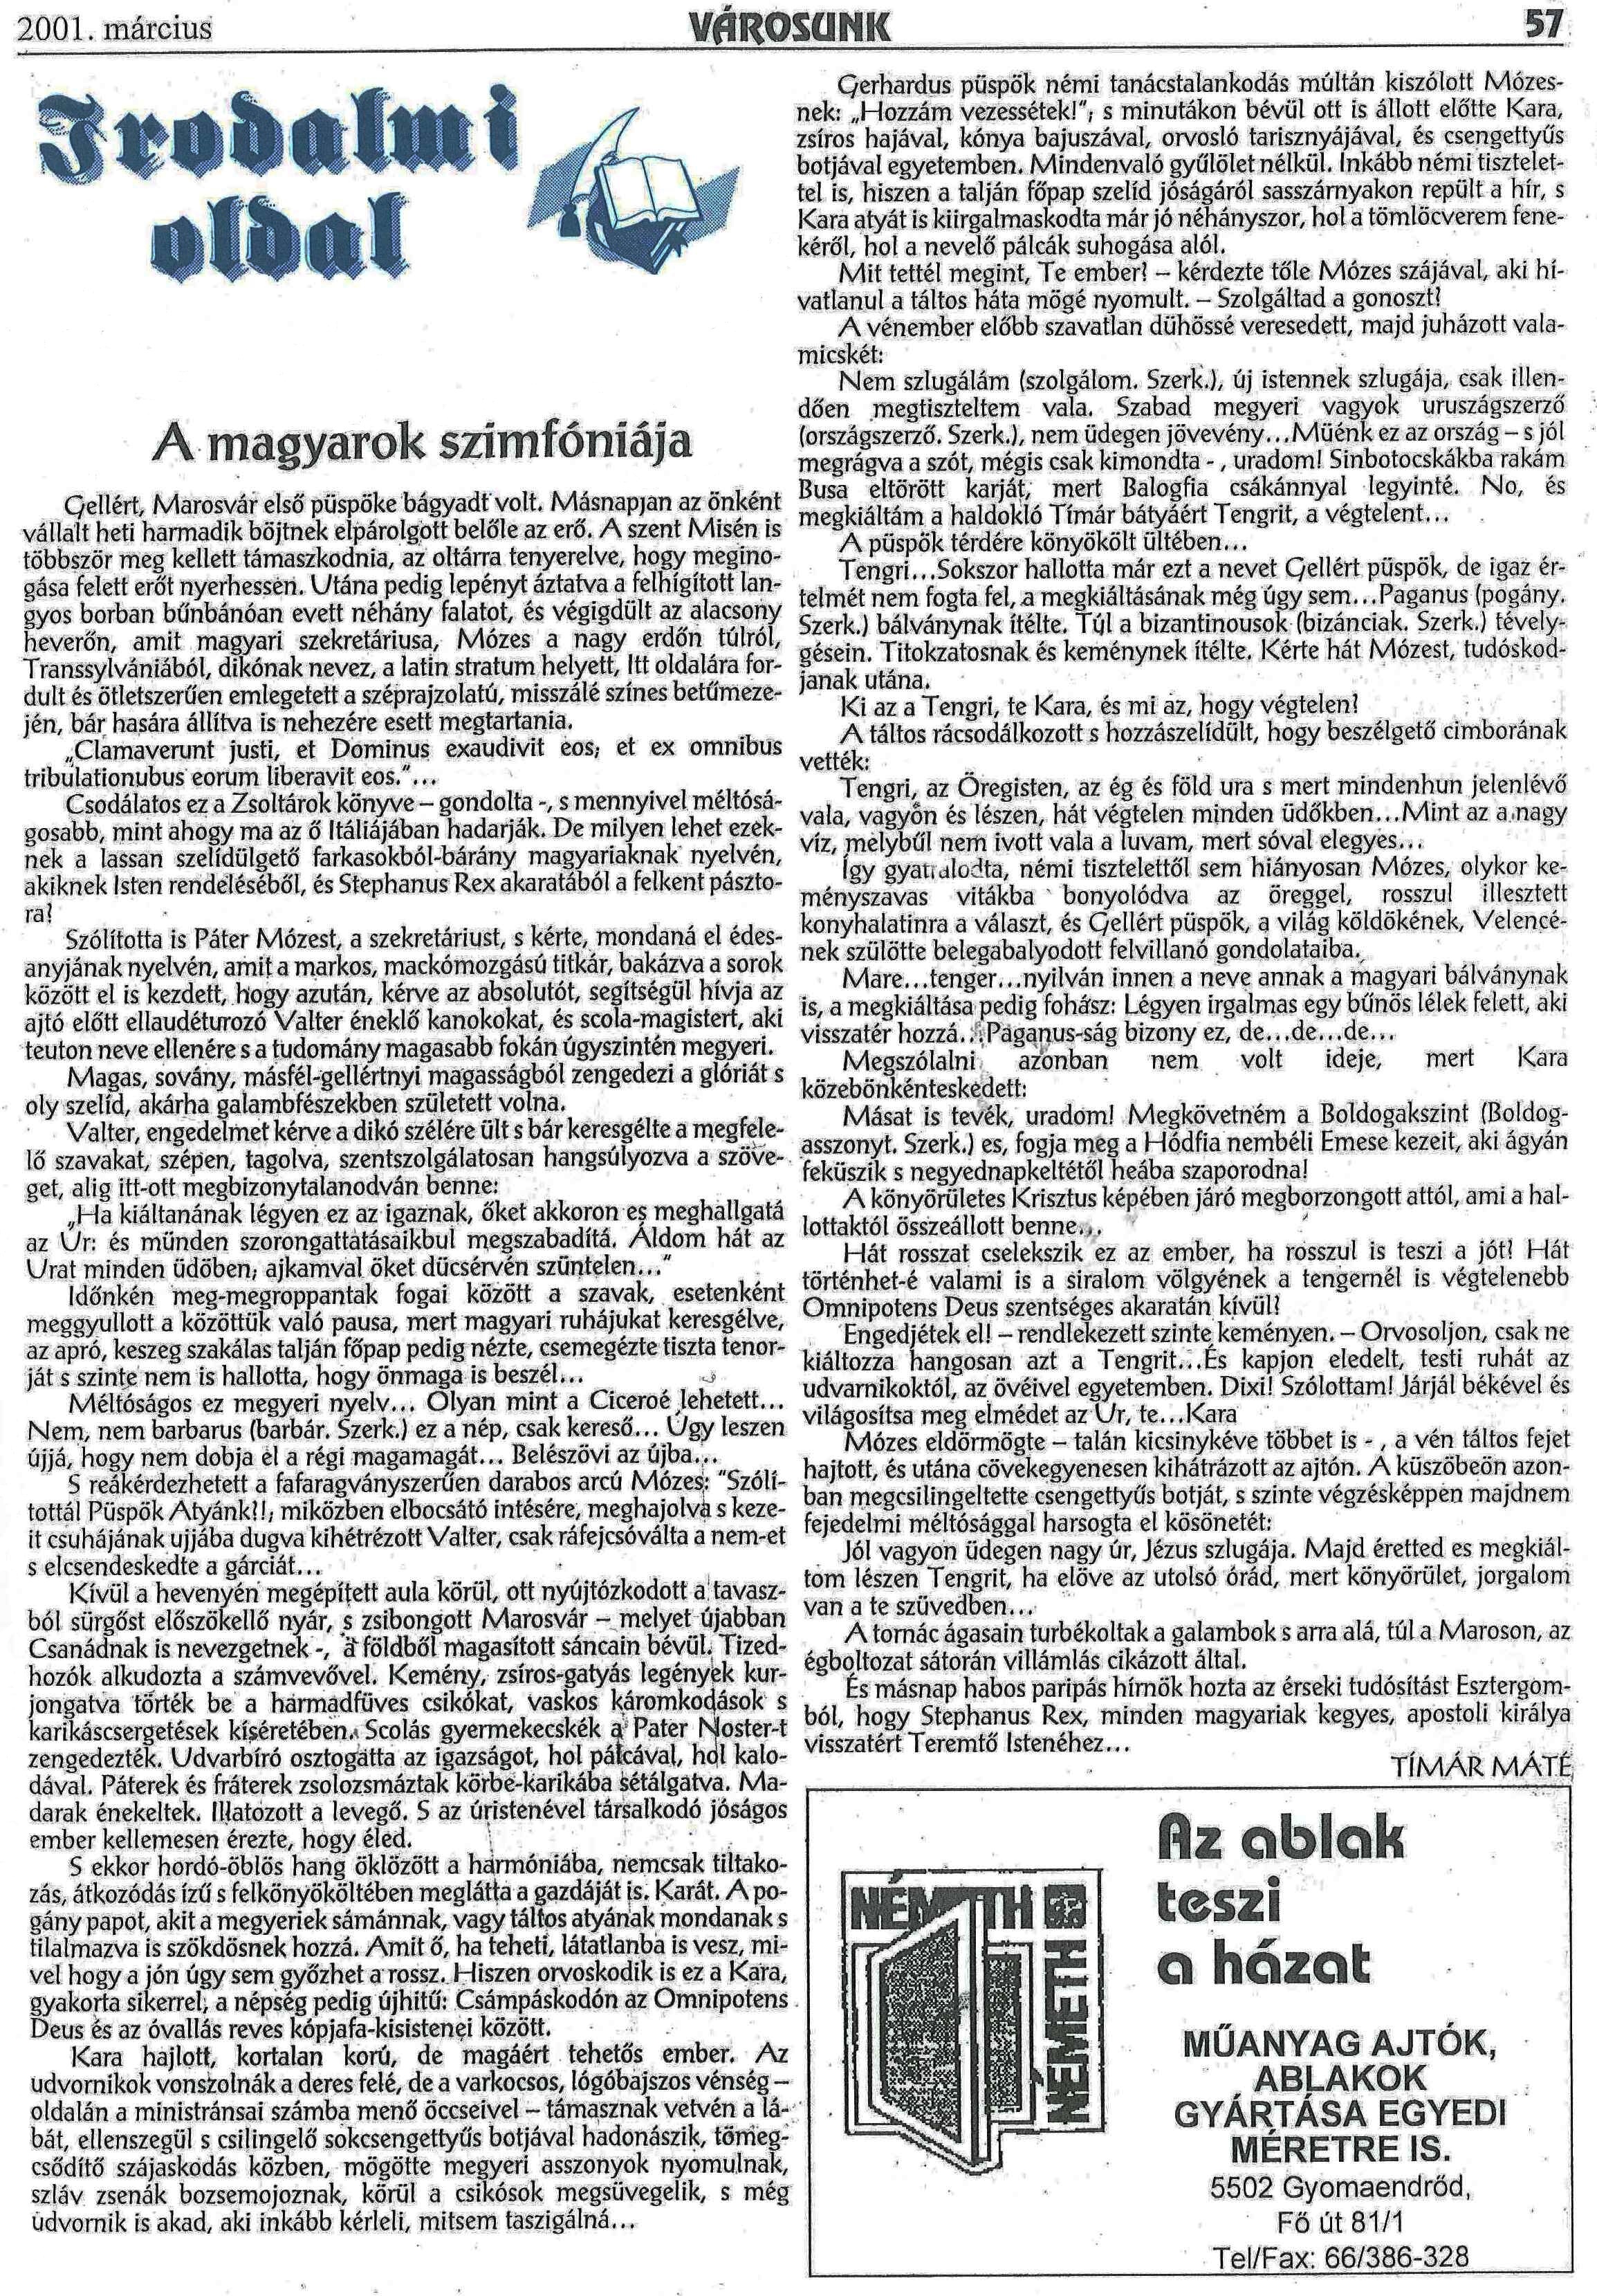 a magyarok szimfoniaja irasa varosunk 2001 03 57